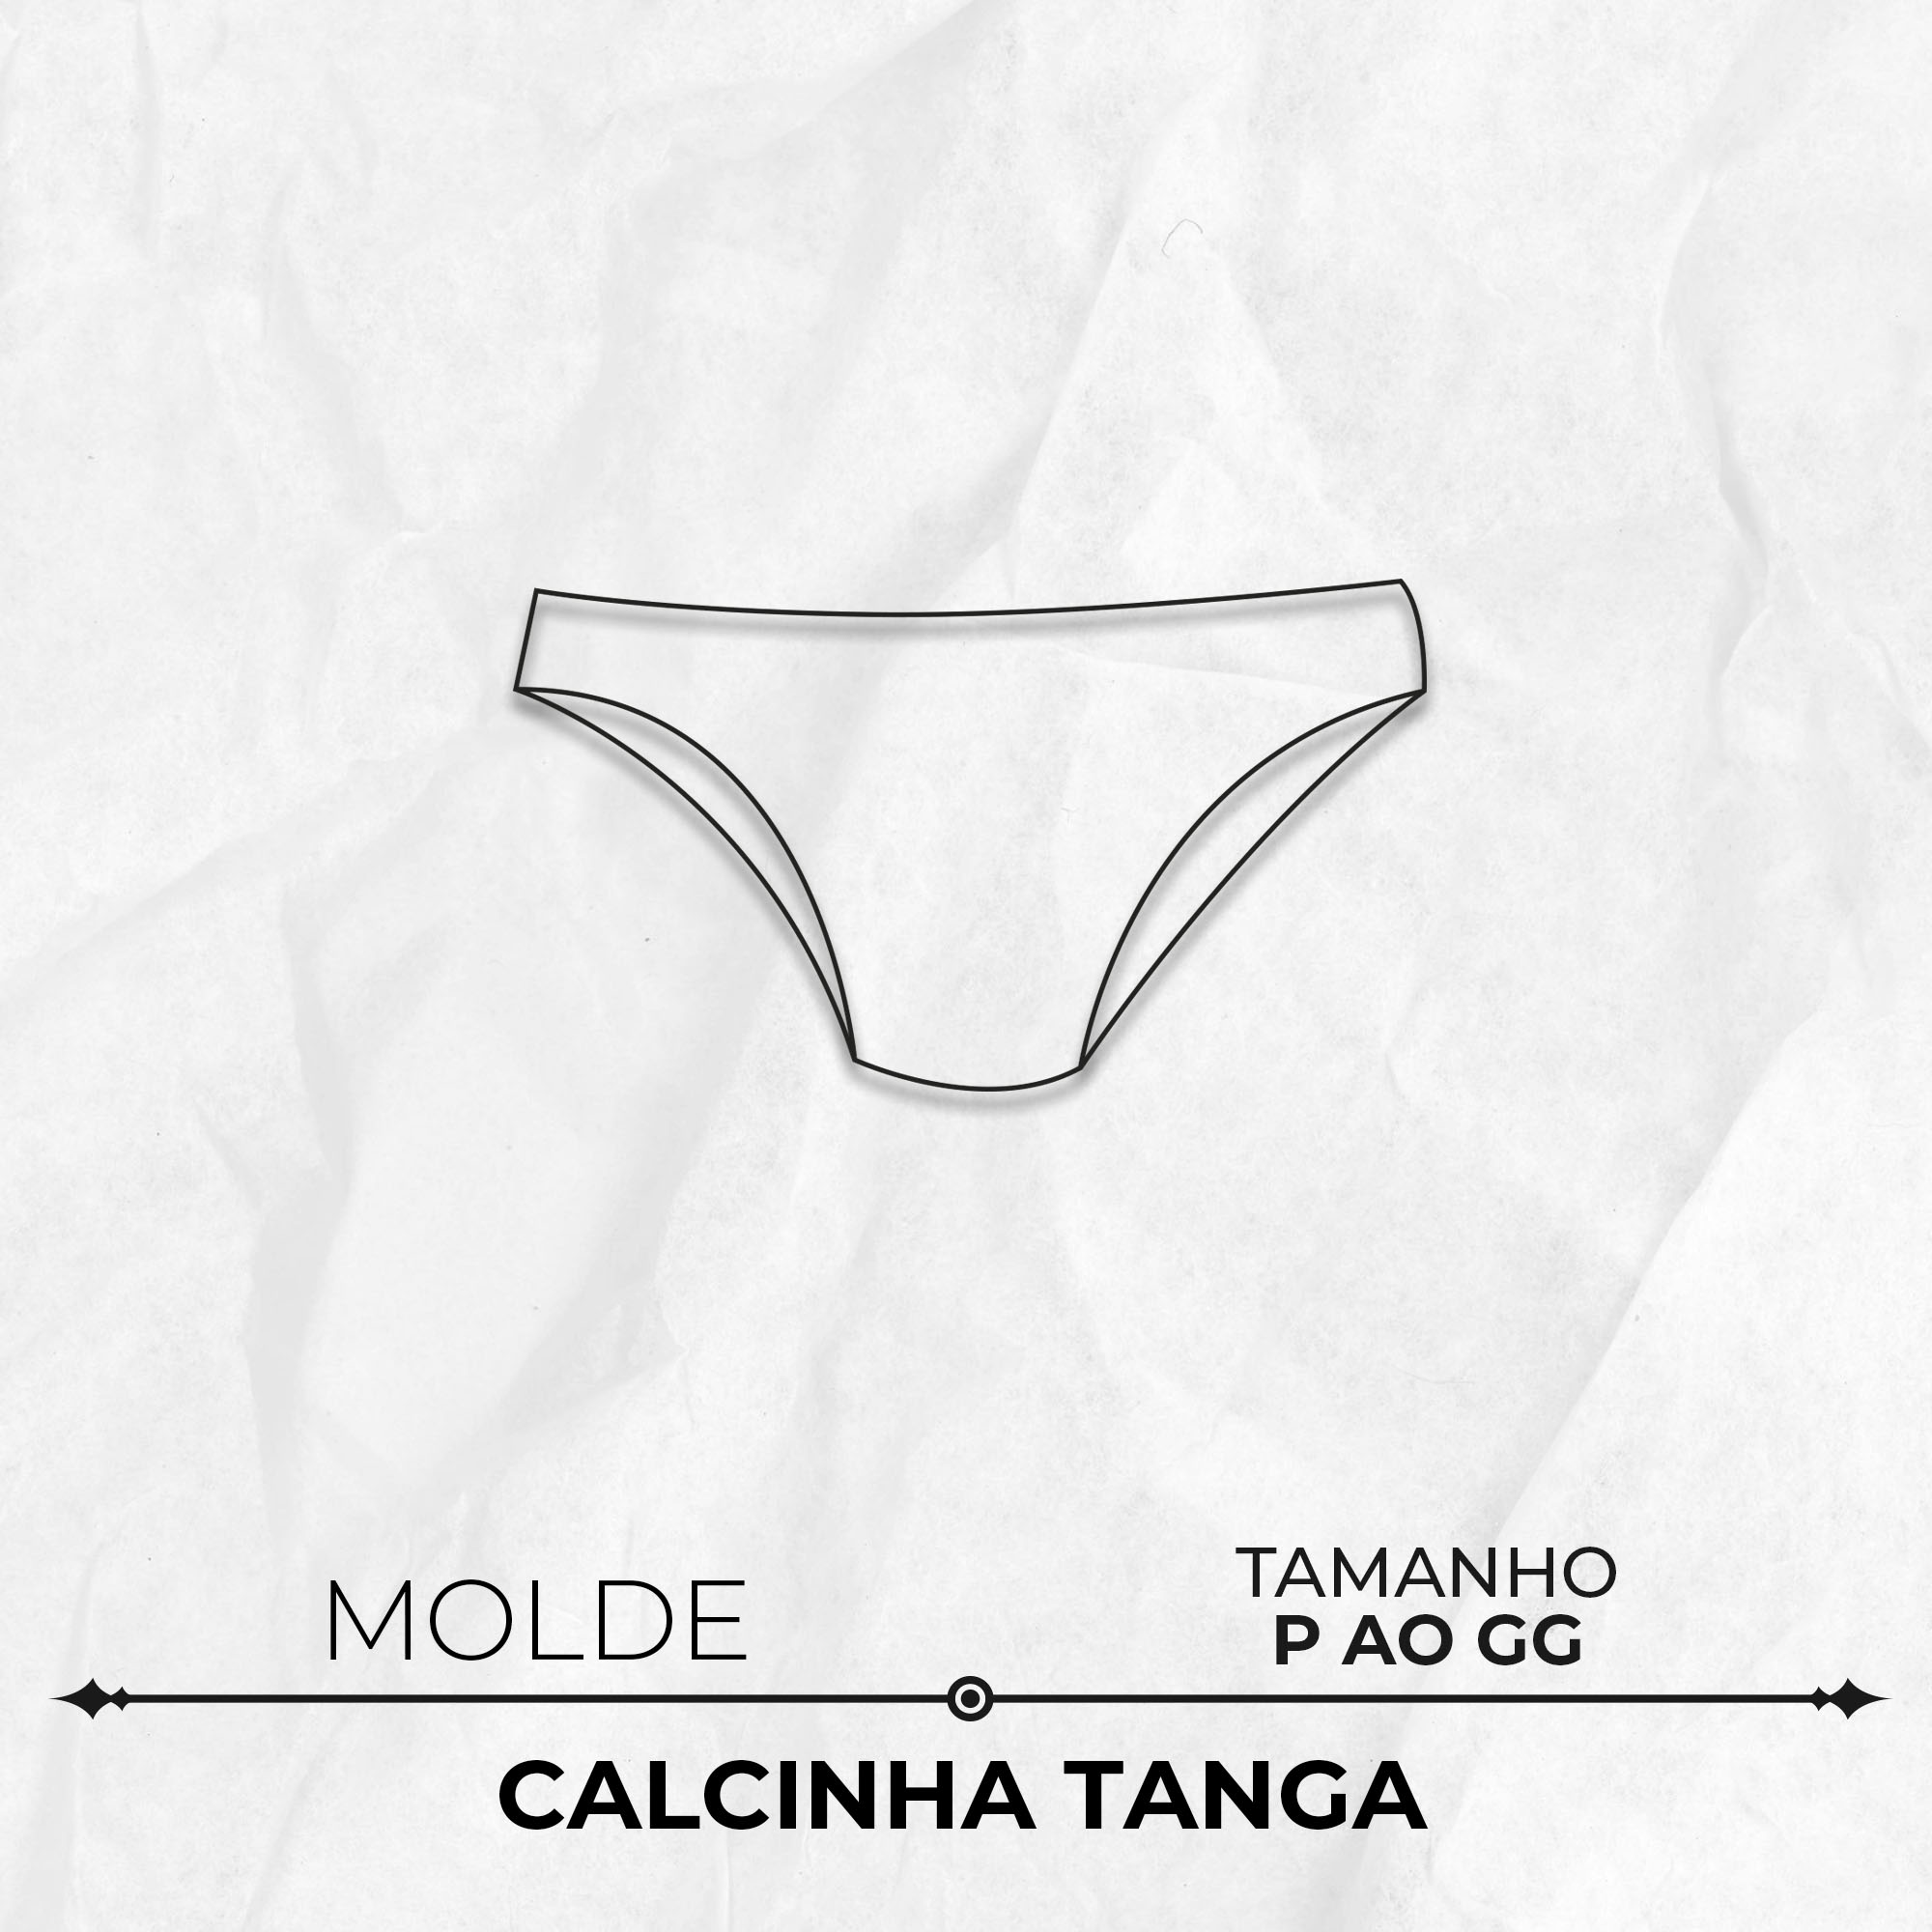 Molde lingerie calcinha tanga by Marlene Mukai